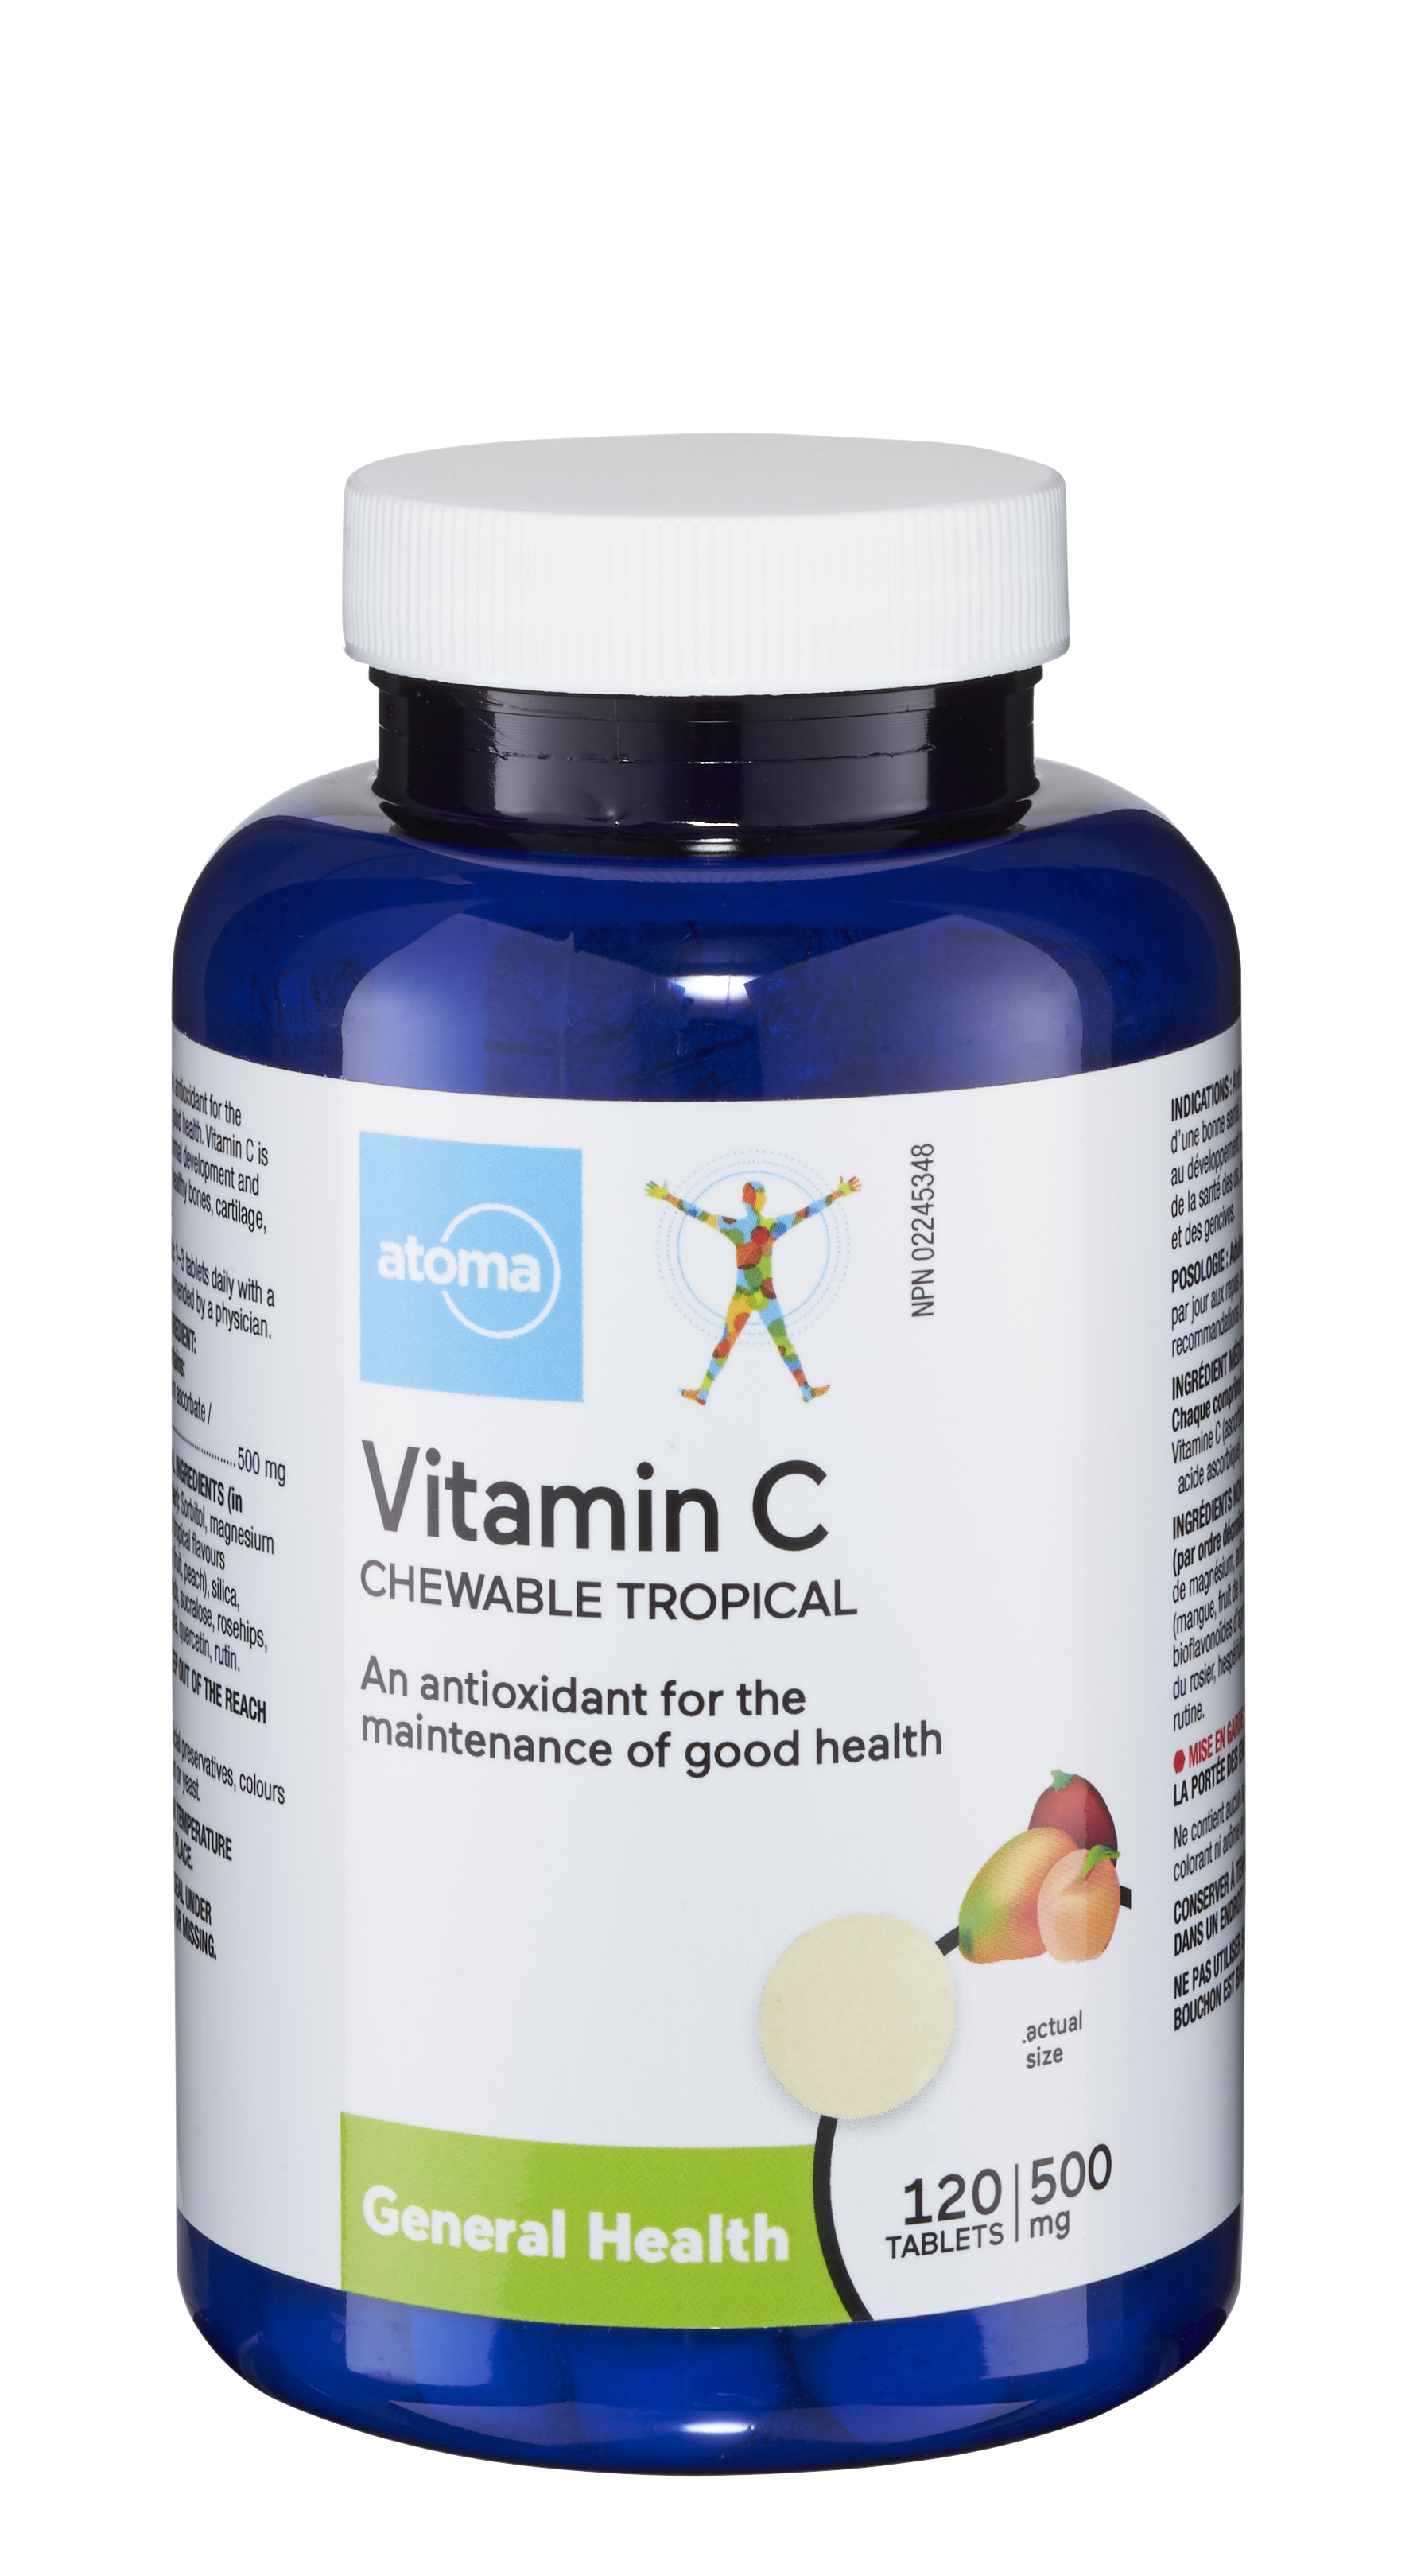 bottle of atoma vitamin c=